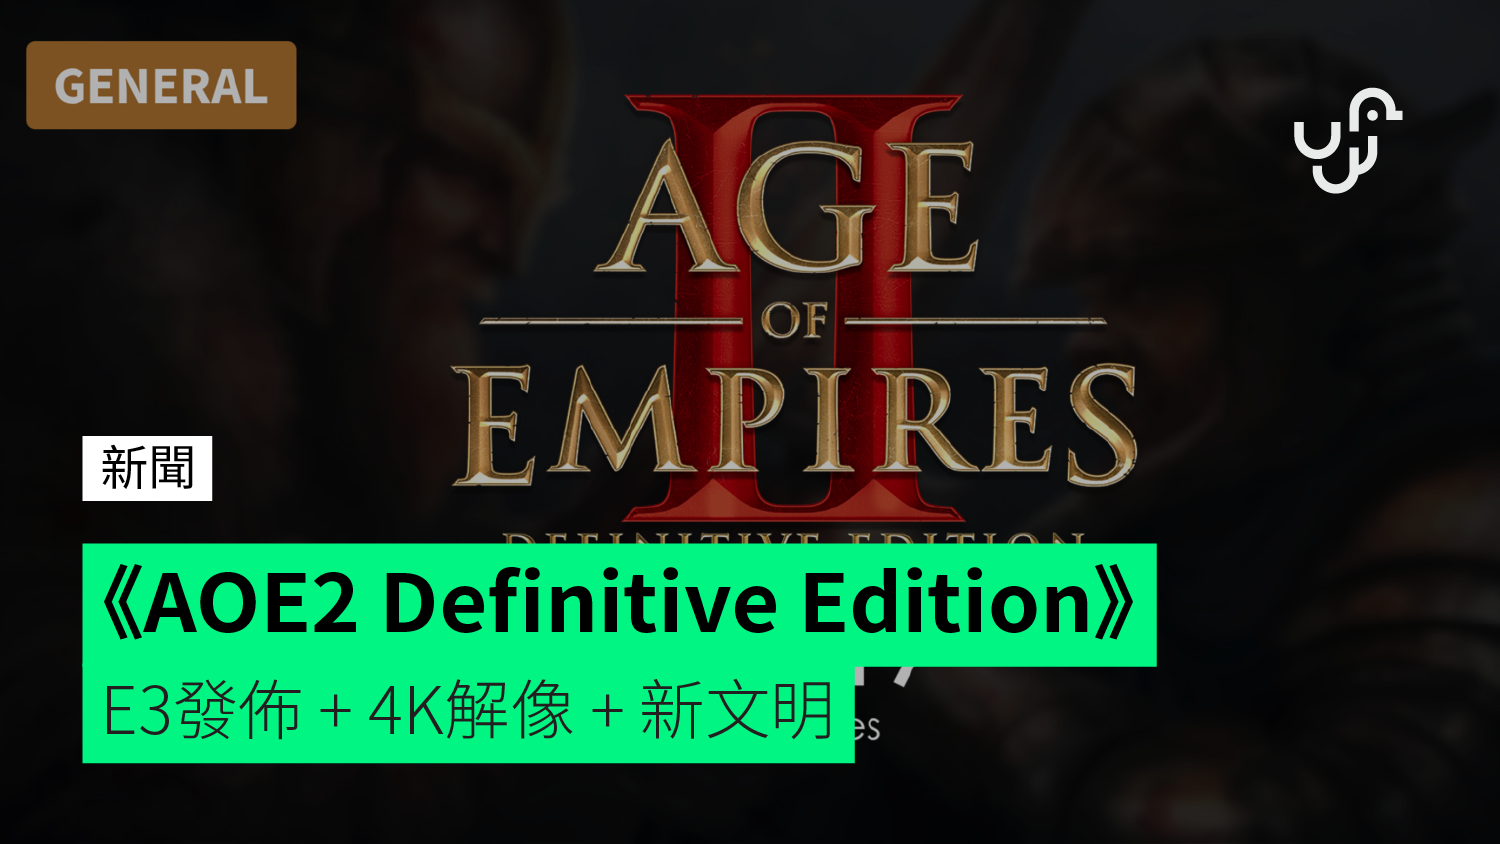 Aoe2 Definitive Edition 世紀帝國2 De版 發佈 4k解像 新文明